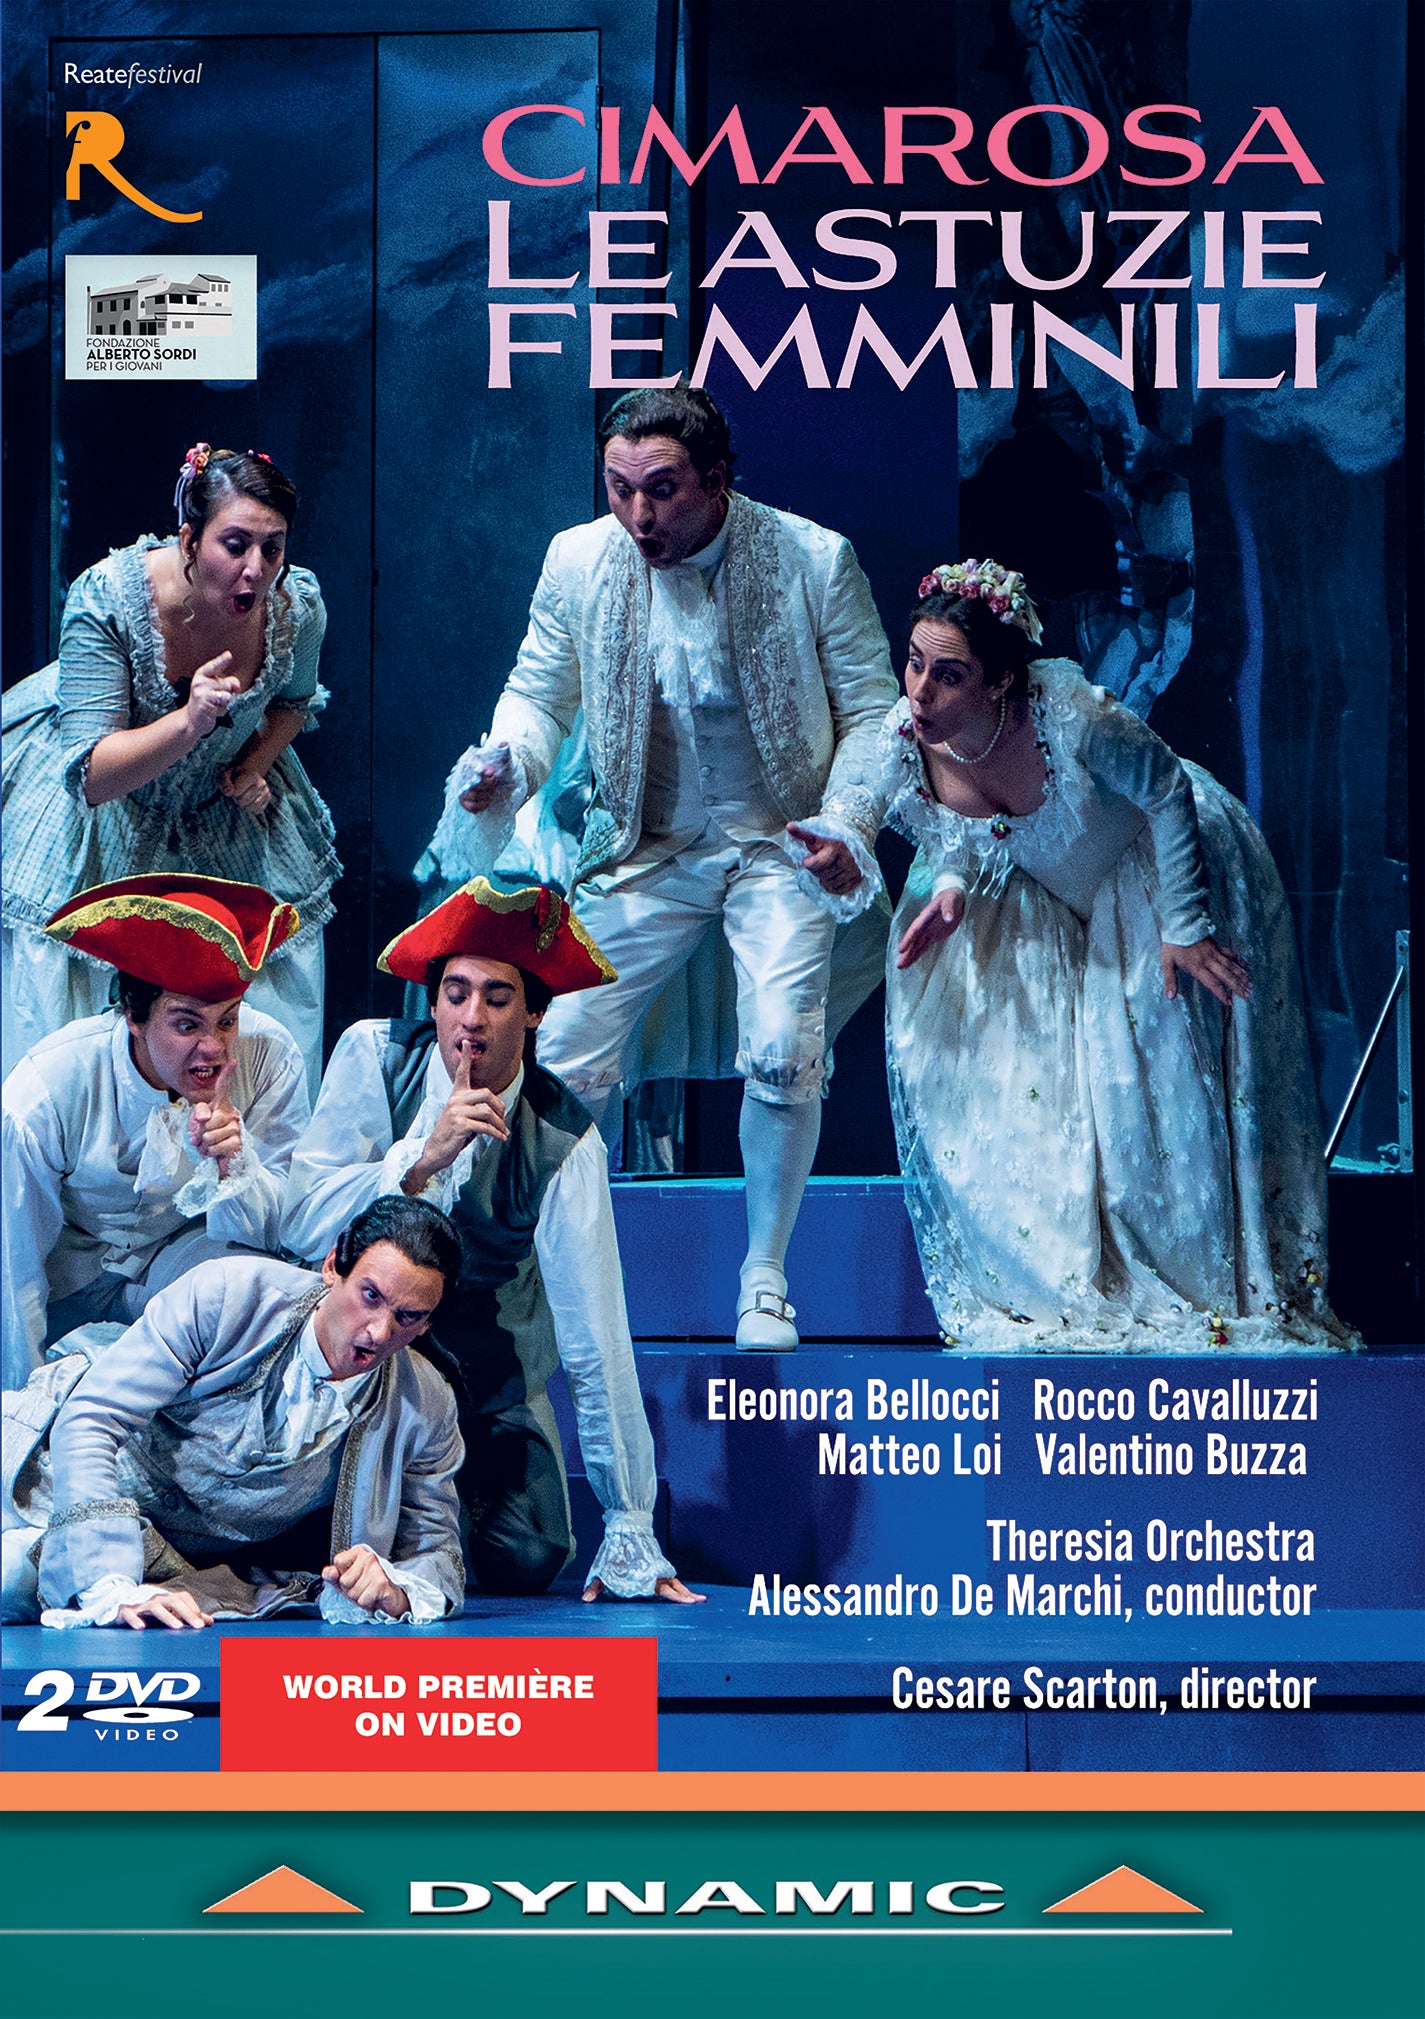 Cimarosa & Palomba: Le astuzie femminili / De Marchi, Theresia Orchestra